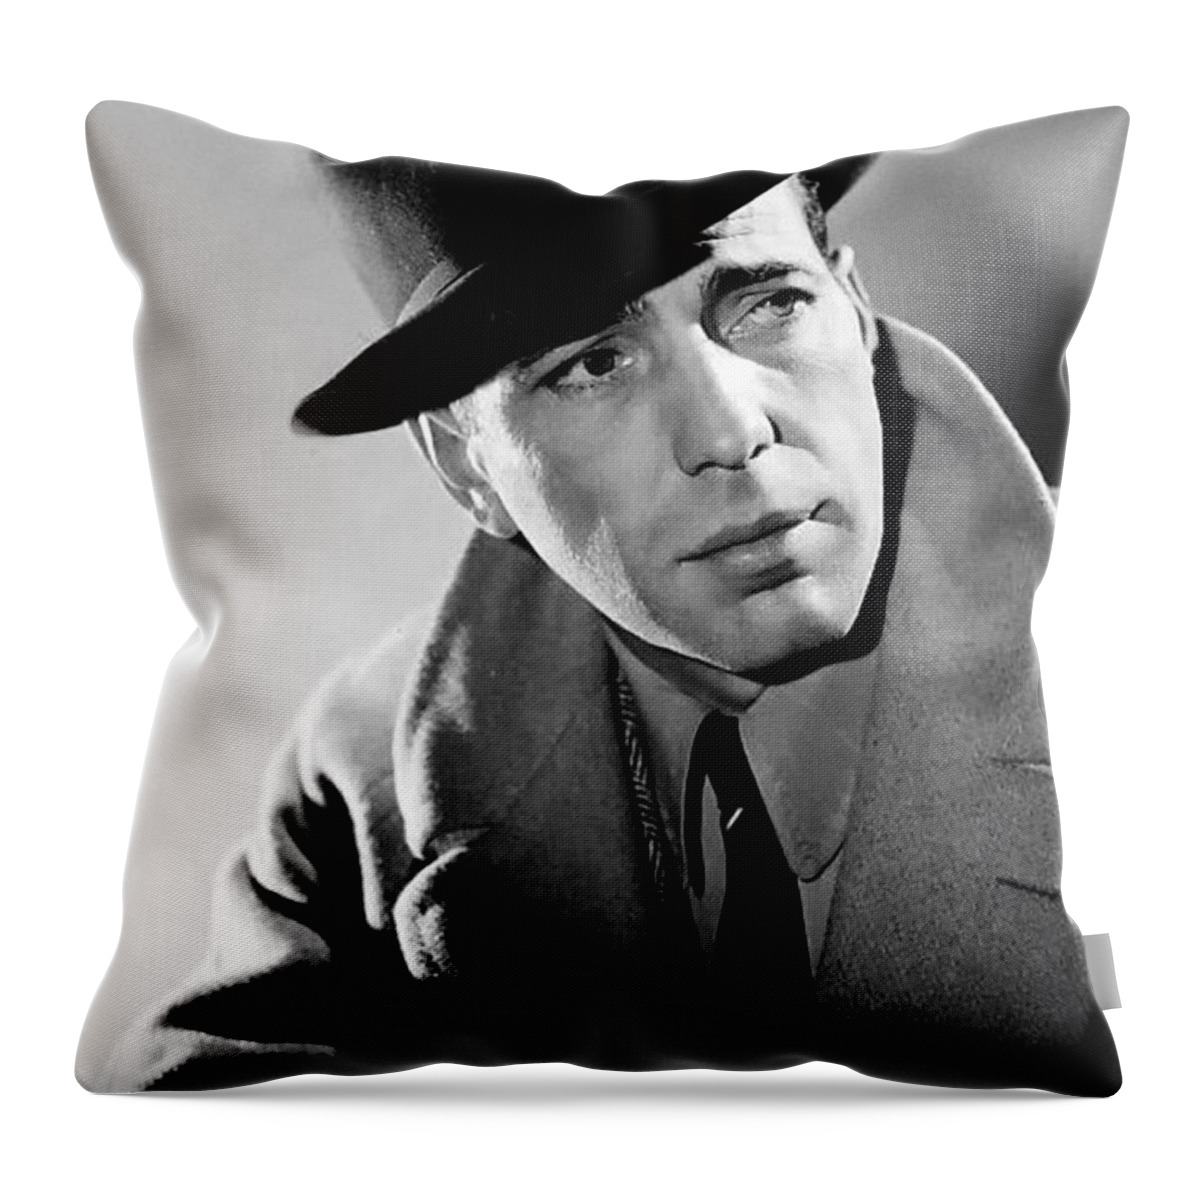 Humphrey Bogart Throw Pillow featuring the photograph Humphrey Bogart by Mountain Dreams